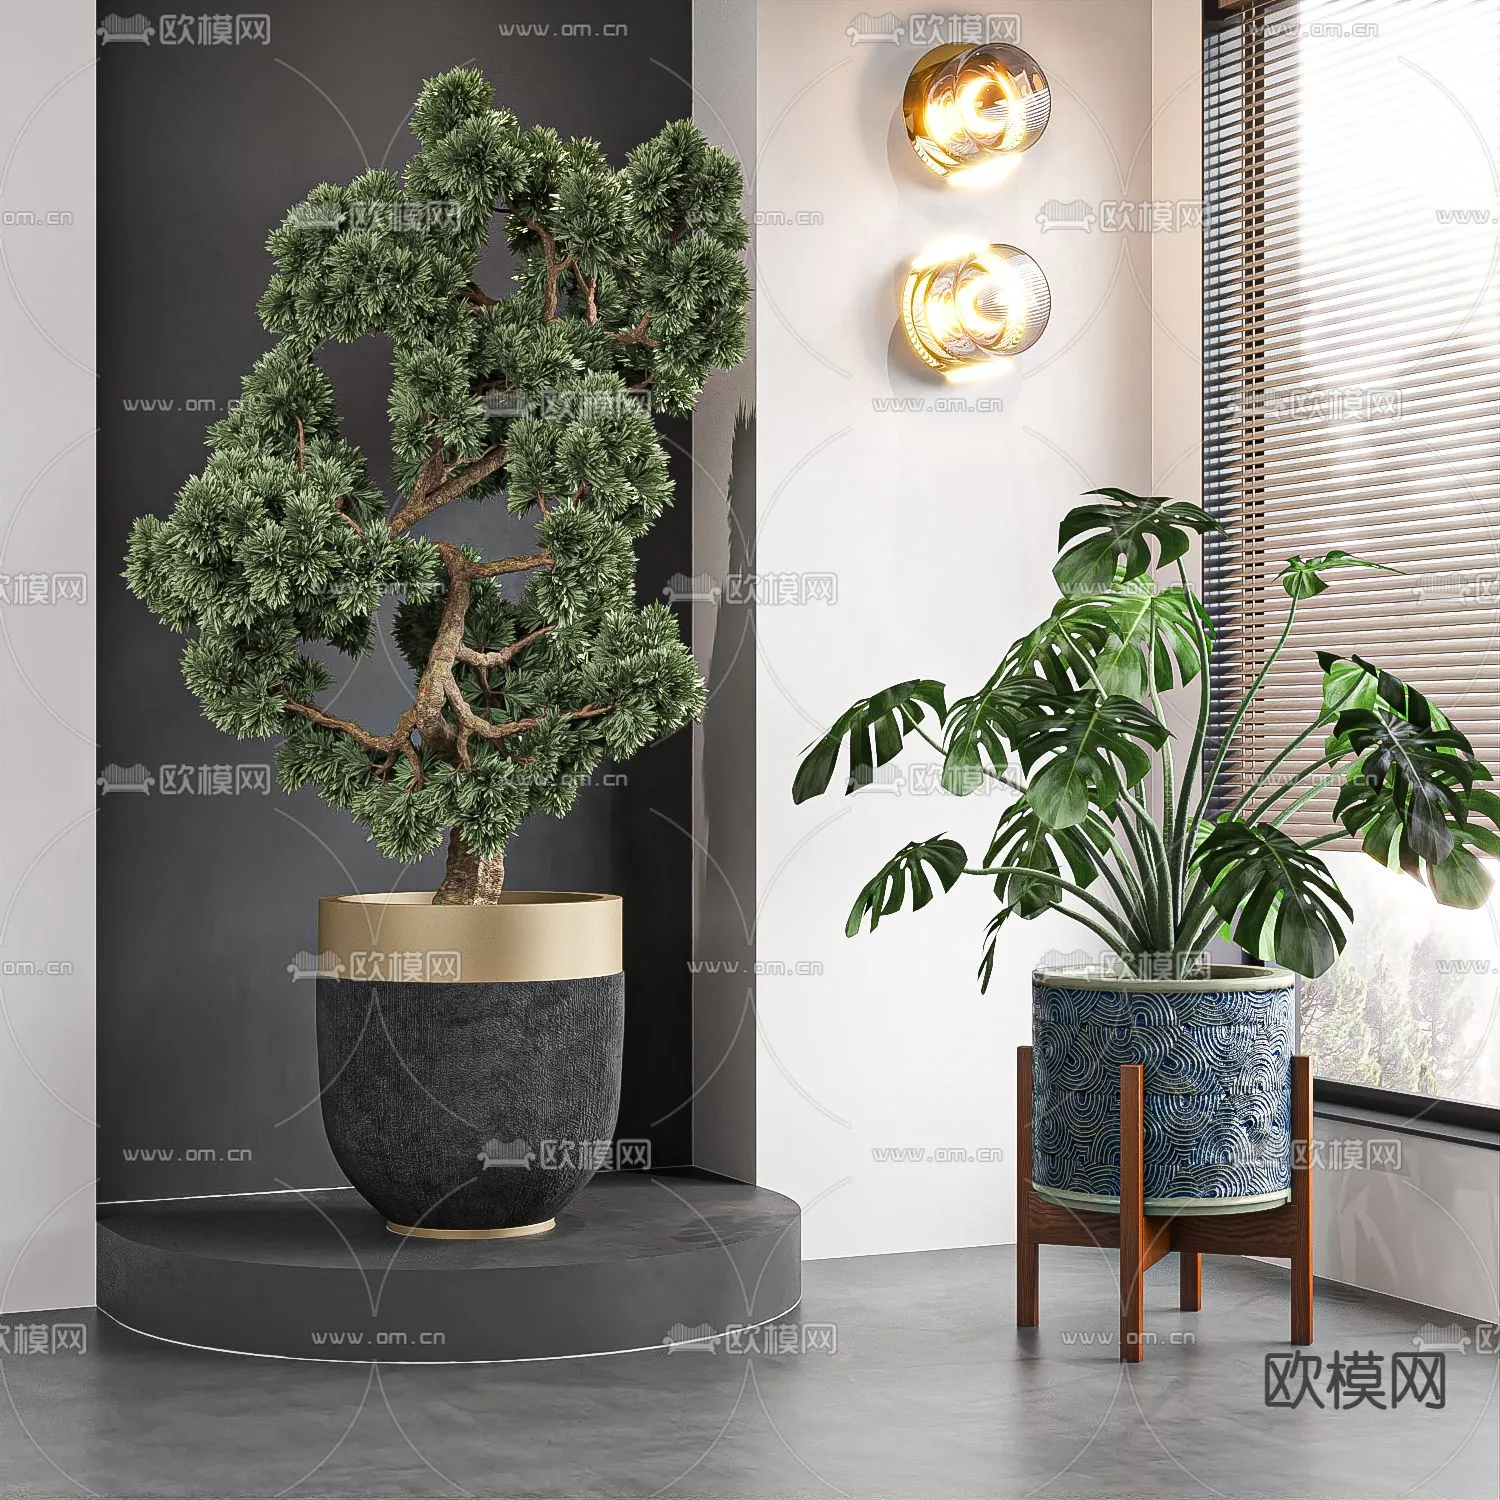 Plant – VRAY / CORONA – 3D MODEL – 424